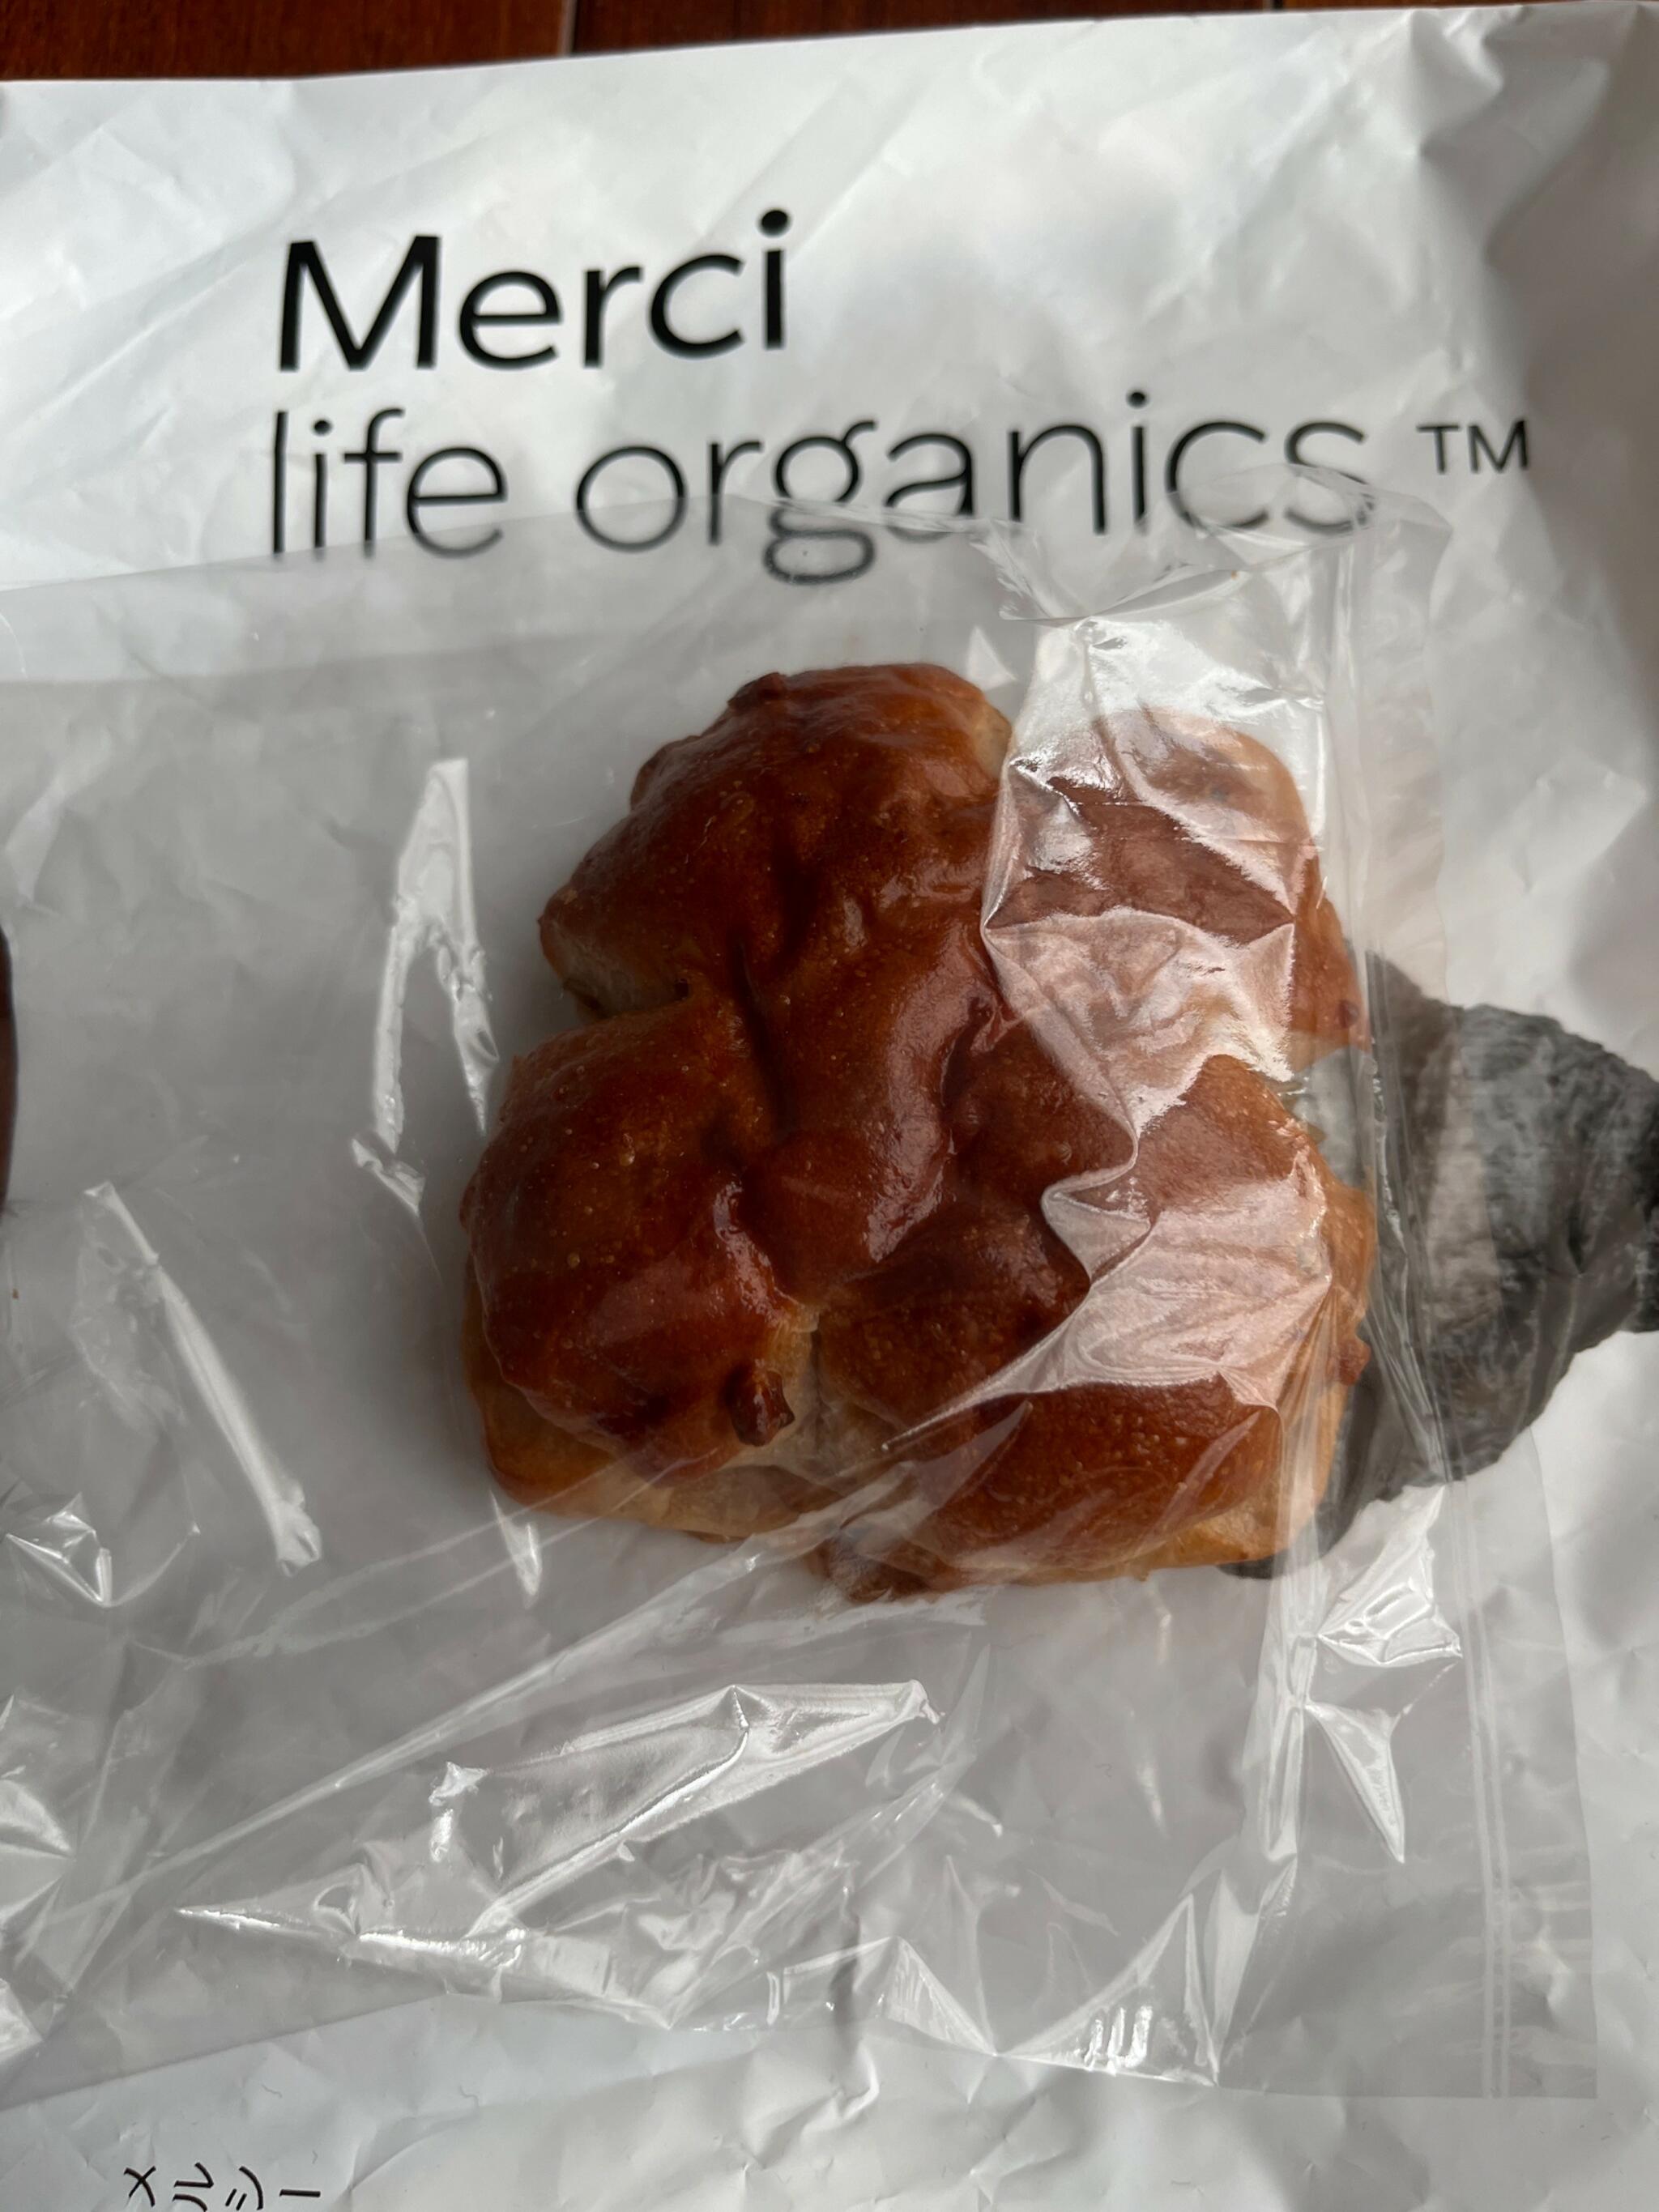 Merci life organics 岡山表町店の代表写真1